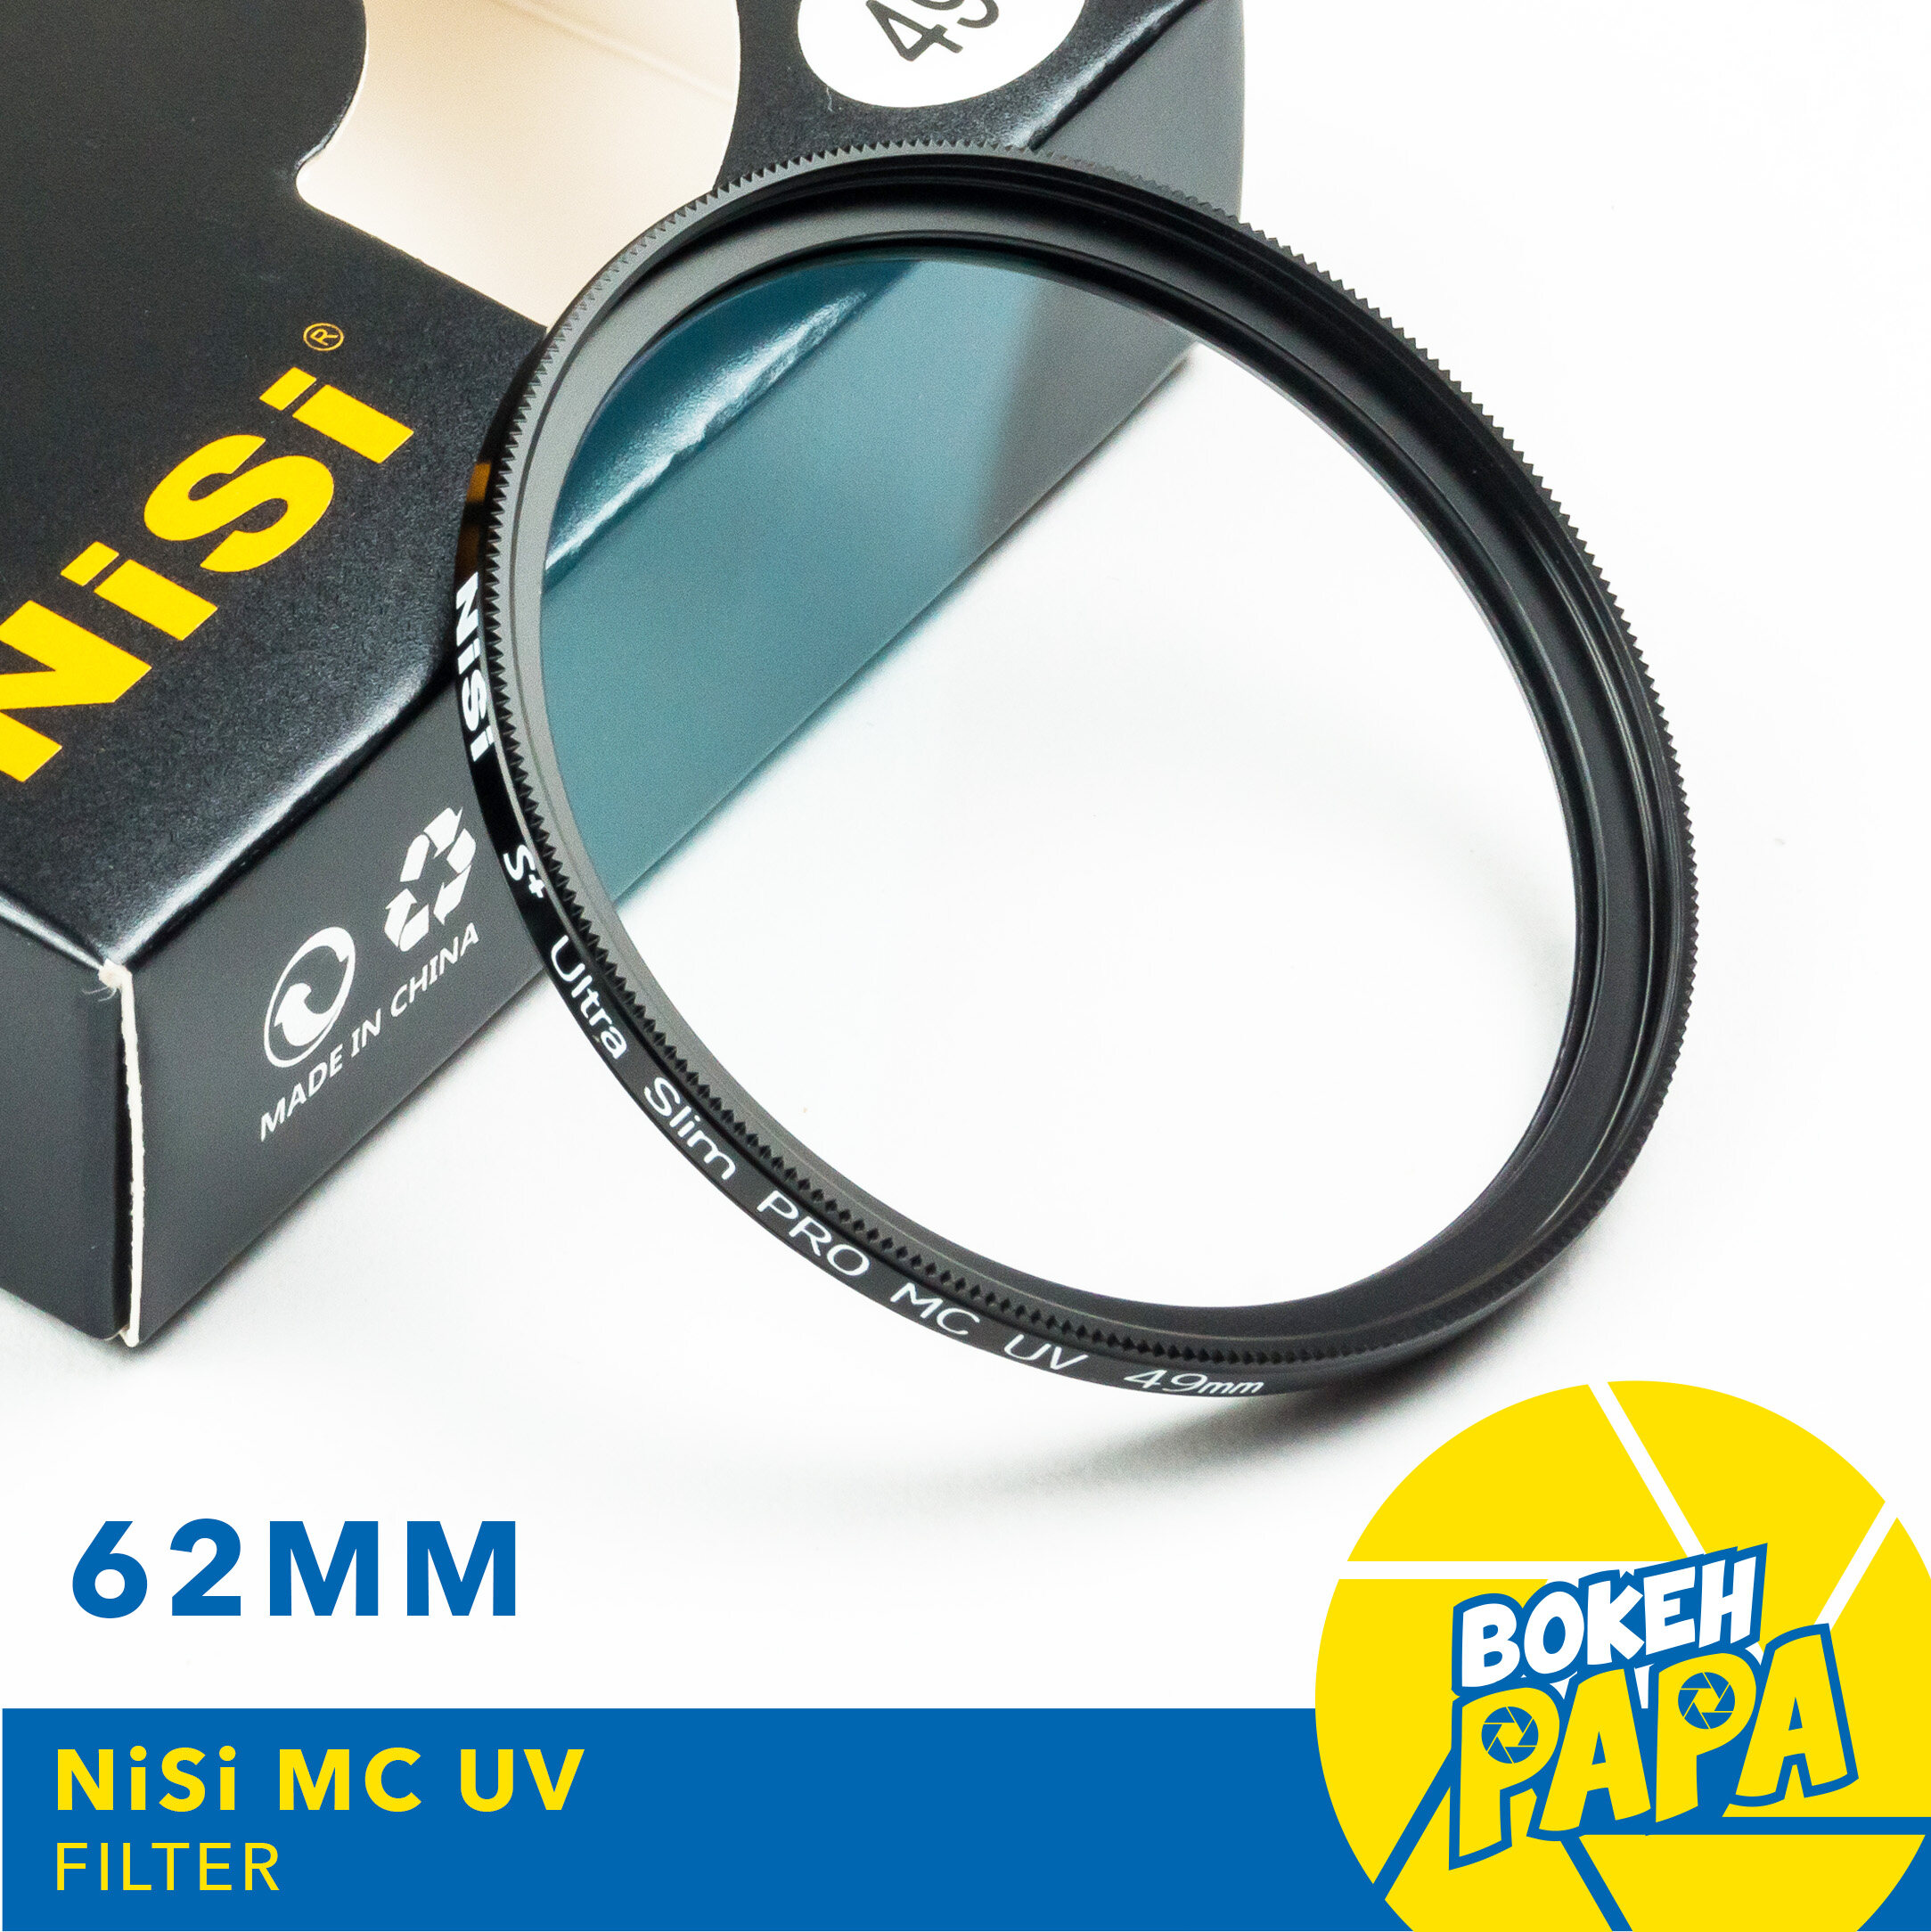 NISI 62mm MC UV Filter ที่กรองรังสียูวีโซด์ขนาดบางเป็นพิเศษ Professional MC ตัวกรองยูวีด้านคู่ 12 การเคลือบหลายชั้นกรอง ( NISI MC UV Filter 62mm )( ฟิลเตอร์ 62 มิลลิเมตร บางพิเศษ )